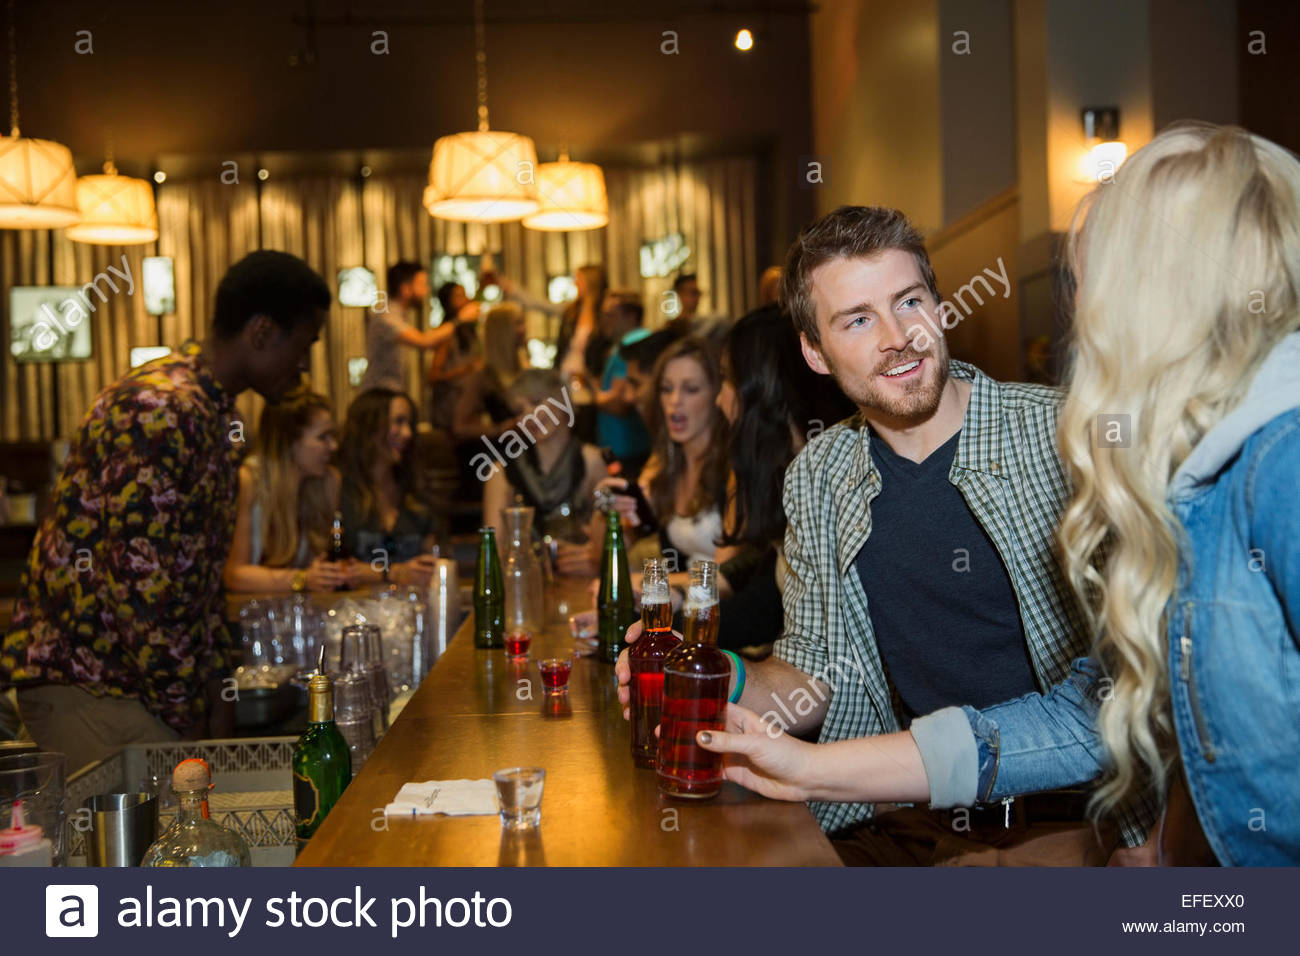 Couple talking and drinking at bar Stock Photo